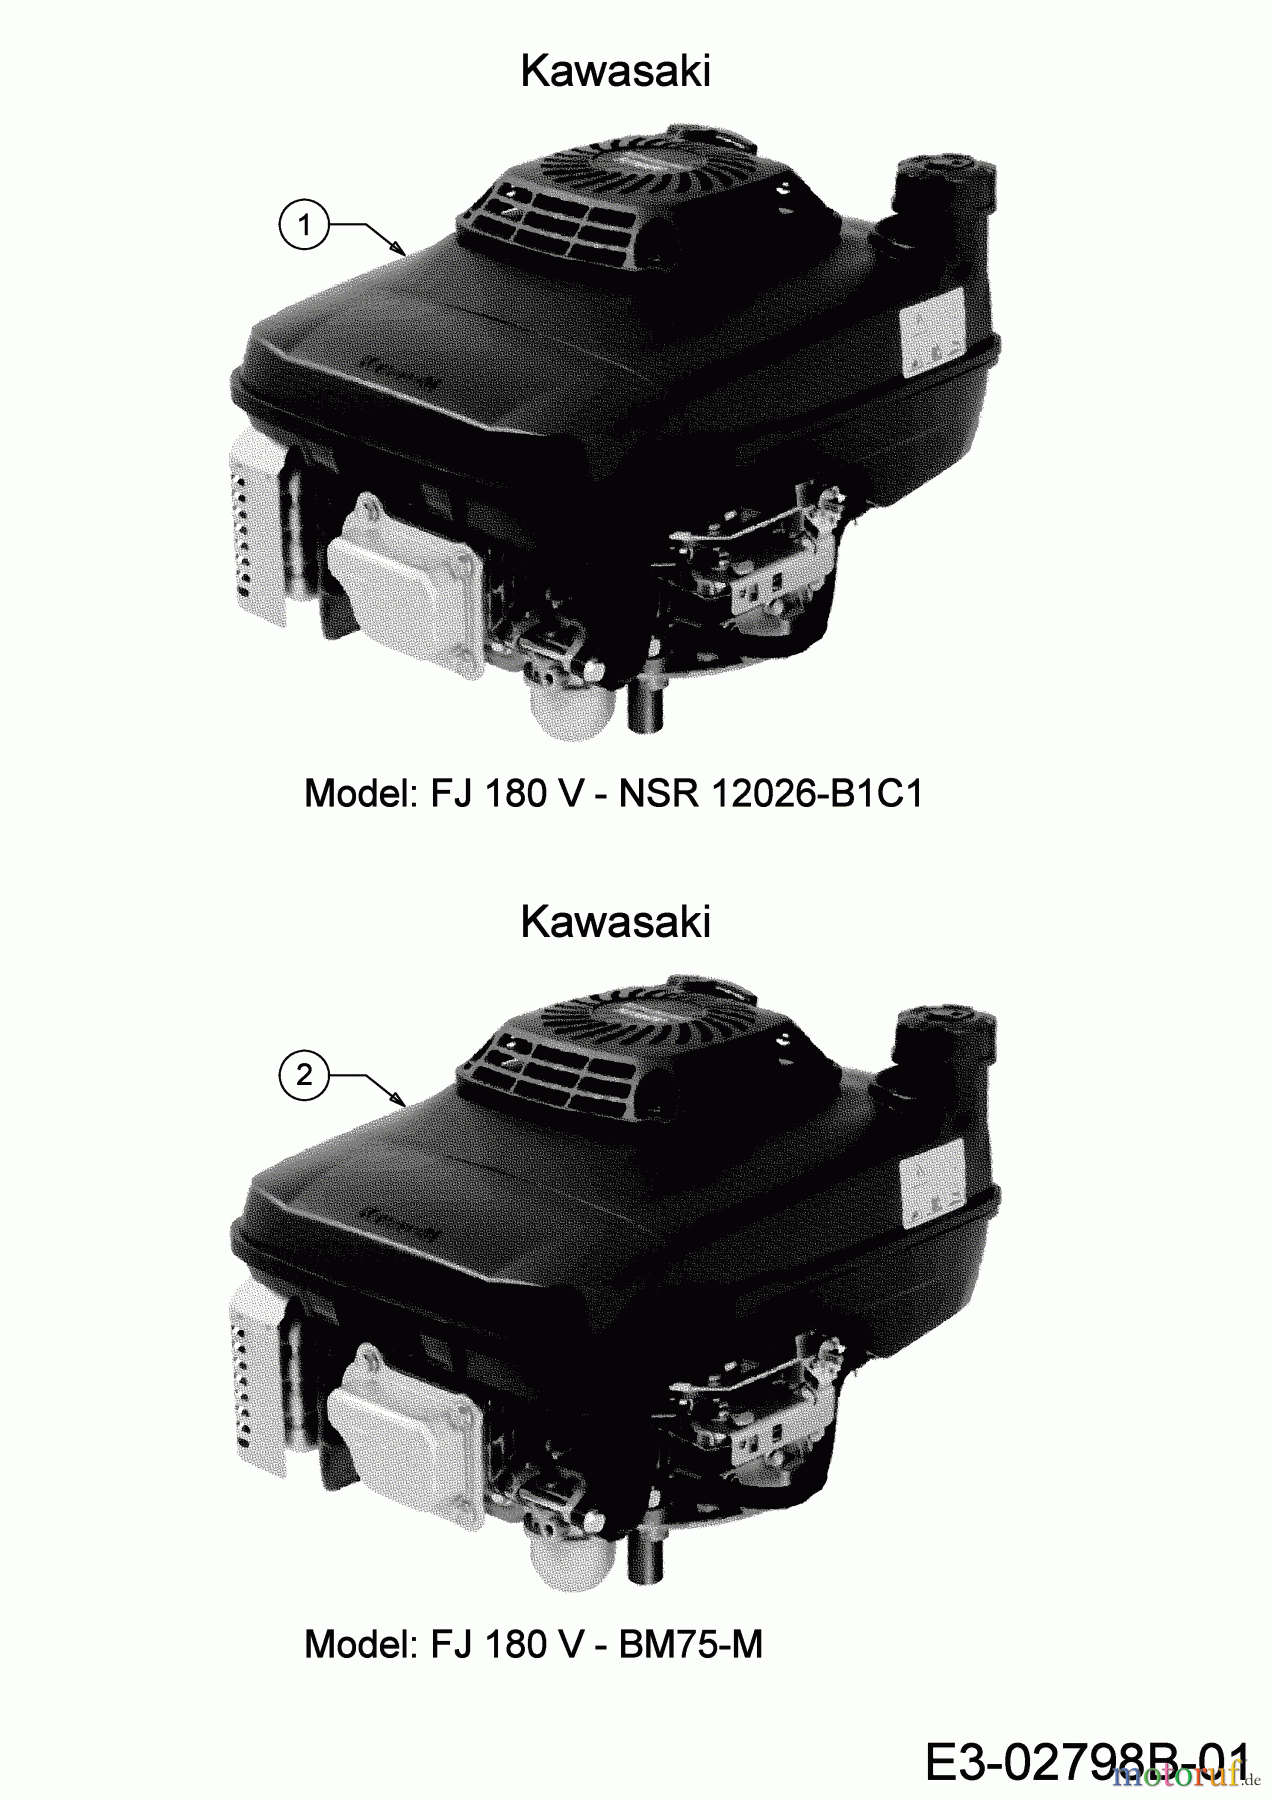  Cub Cadet Motormäher mit Antrieb LM3 ER53S 12BBPV7D603 (2019) Motor Kawasaki